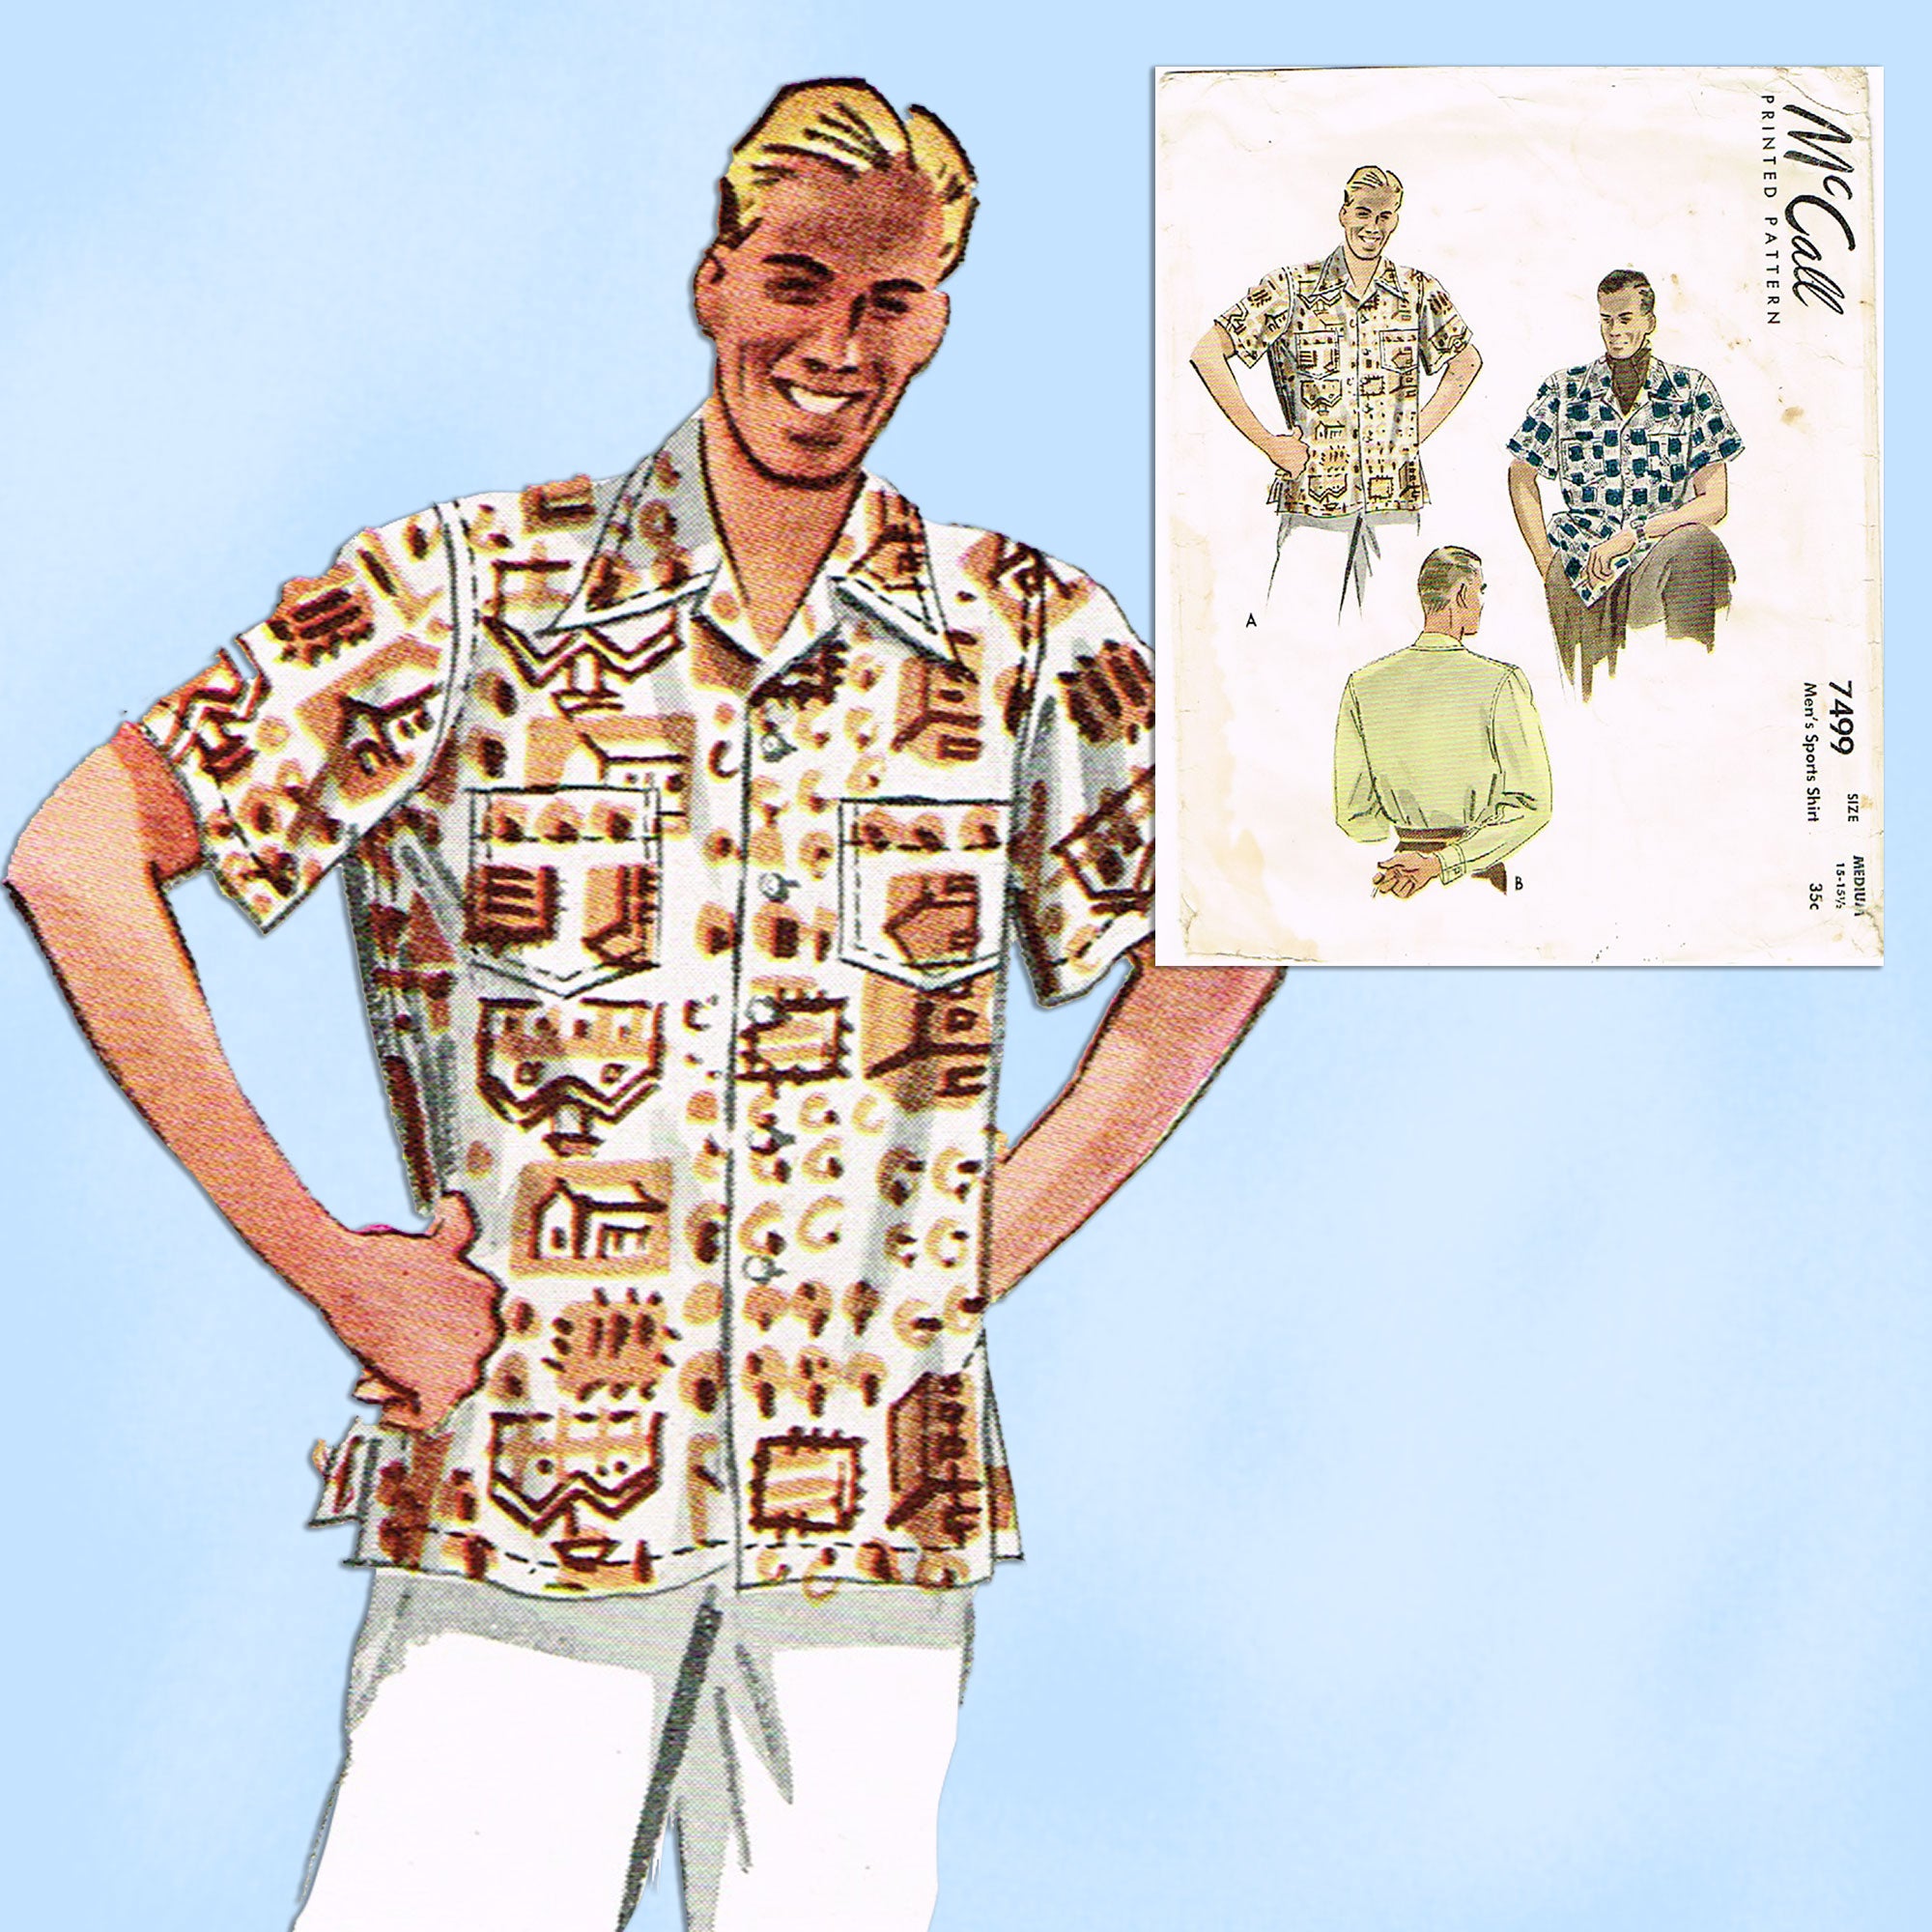 Tropical Shirt sewing pattern